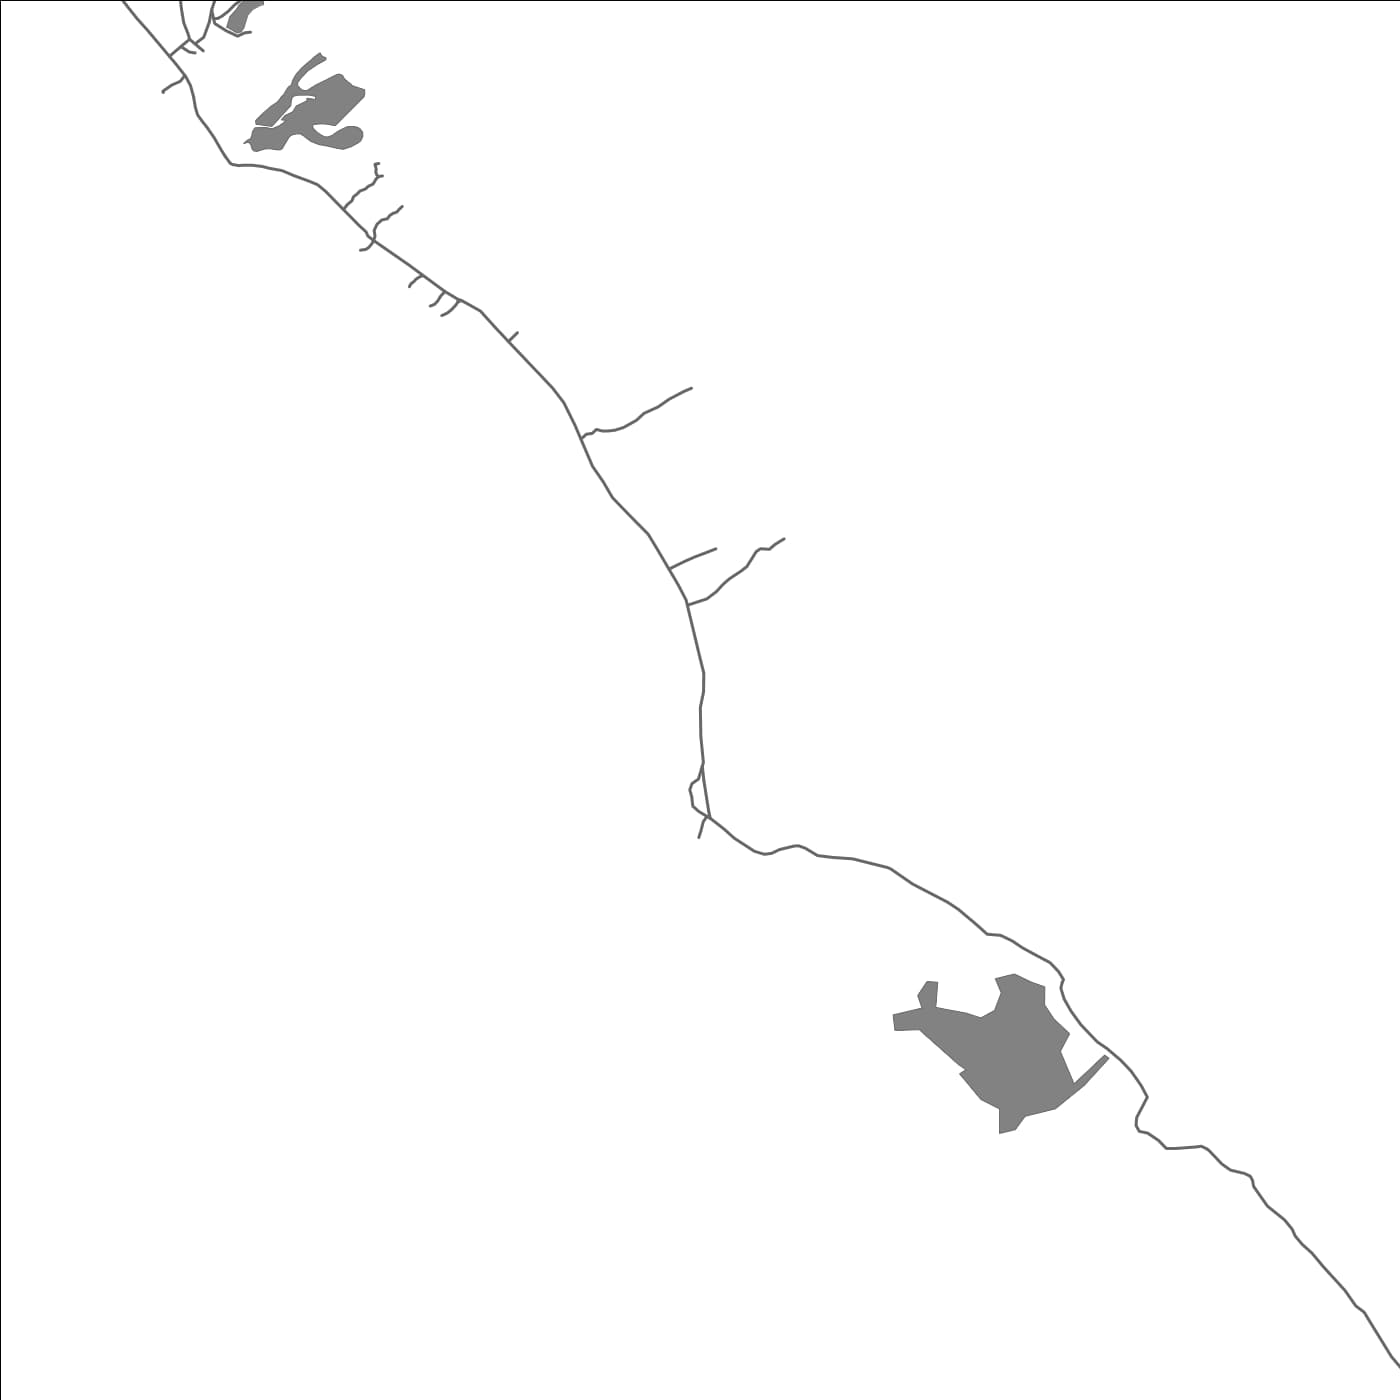 ROAD MAP OF TABONIBARA, KIRIBATI BY MAPBAKES